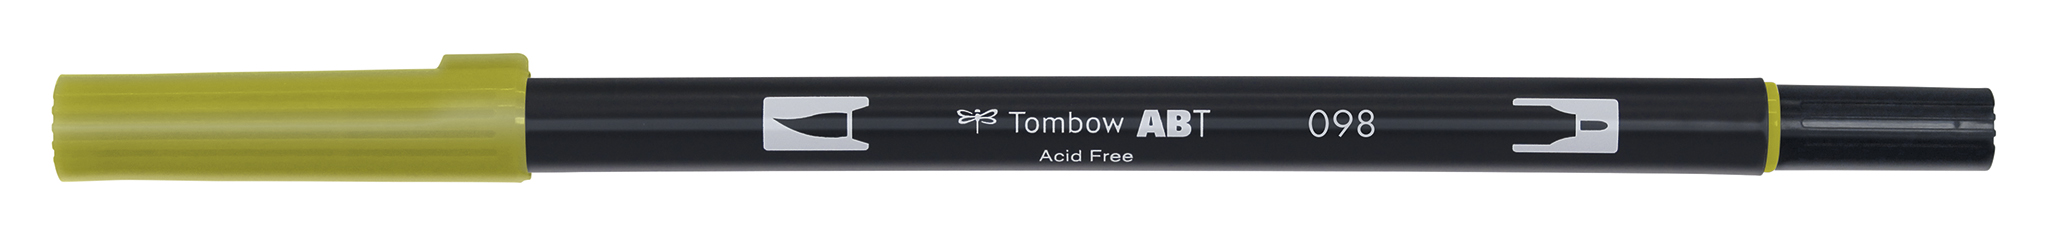 Tombow Art Brush Pen, avocado